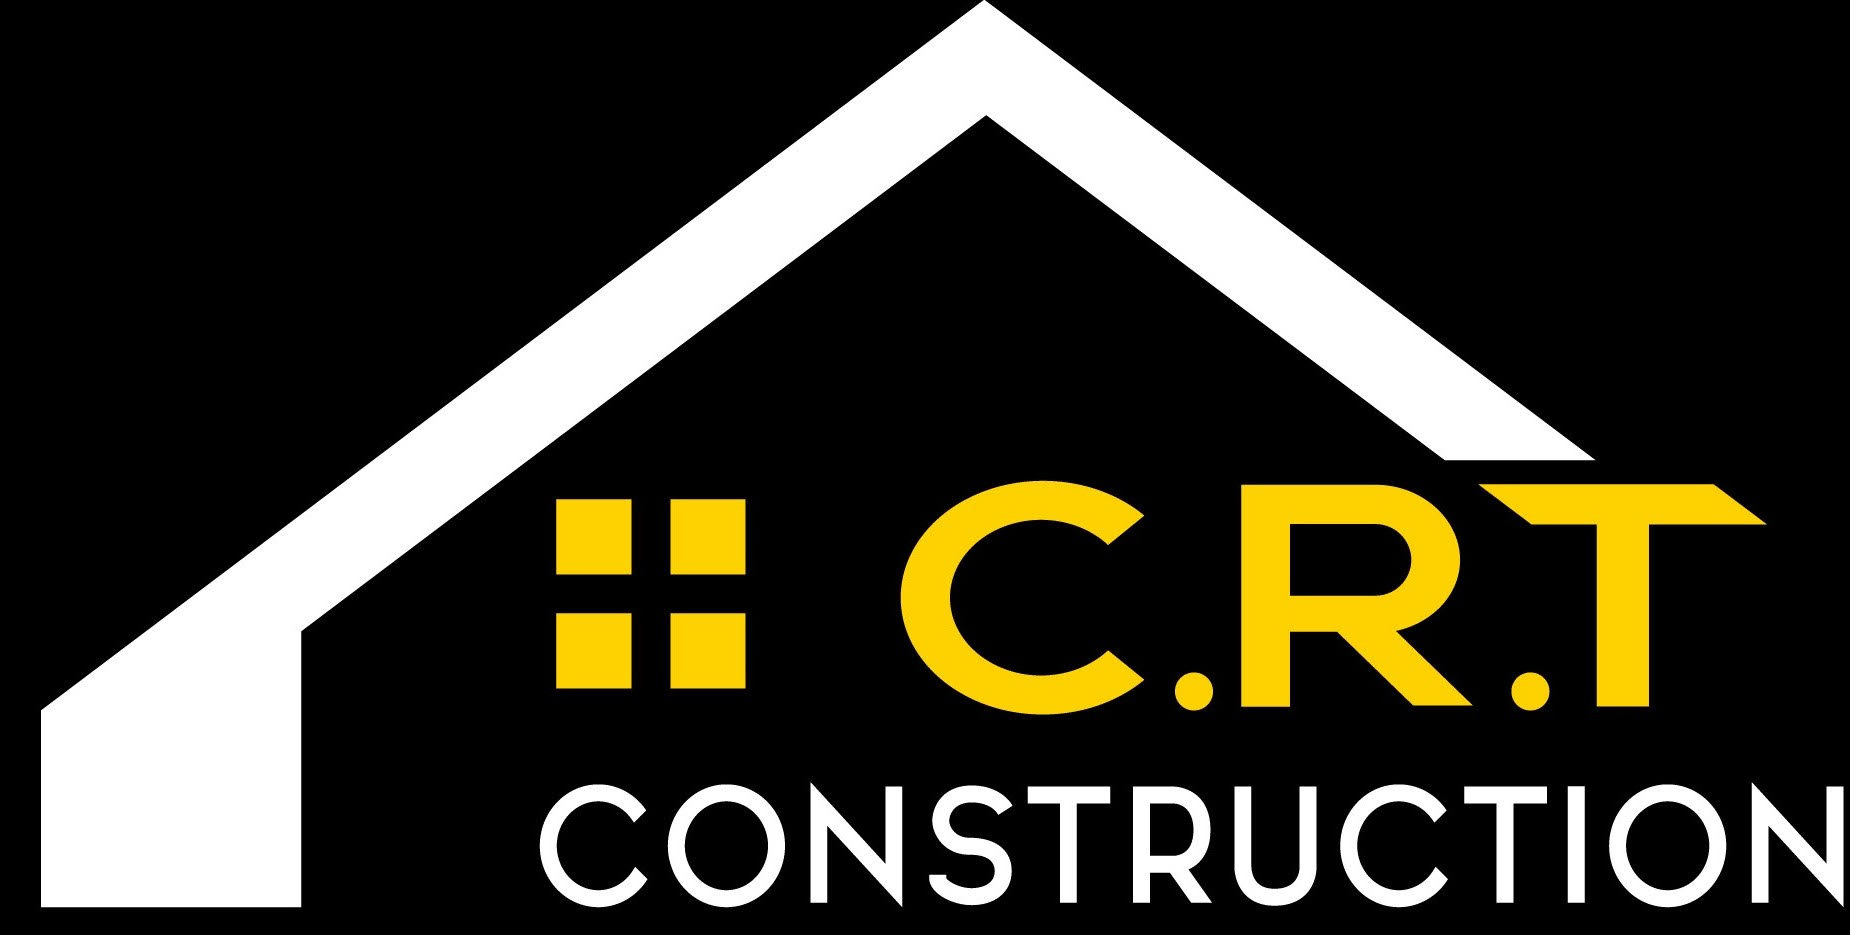 CRT CONSTRUCTION